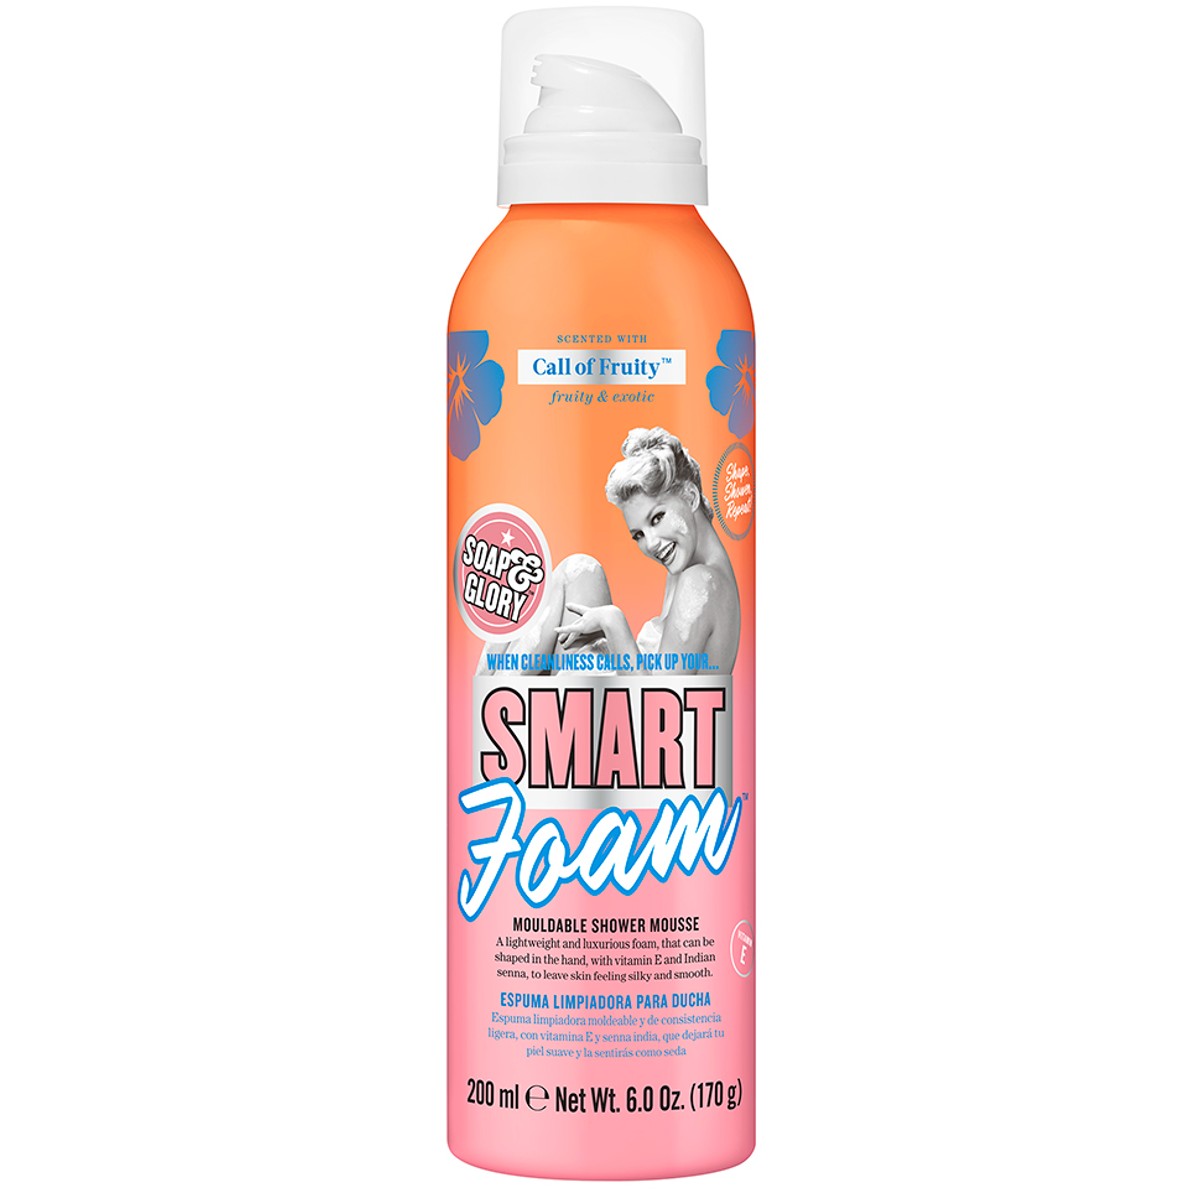 Call Of Fruity Smart Foam Moisturising Shower Mousse